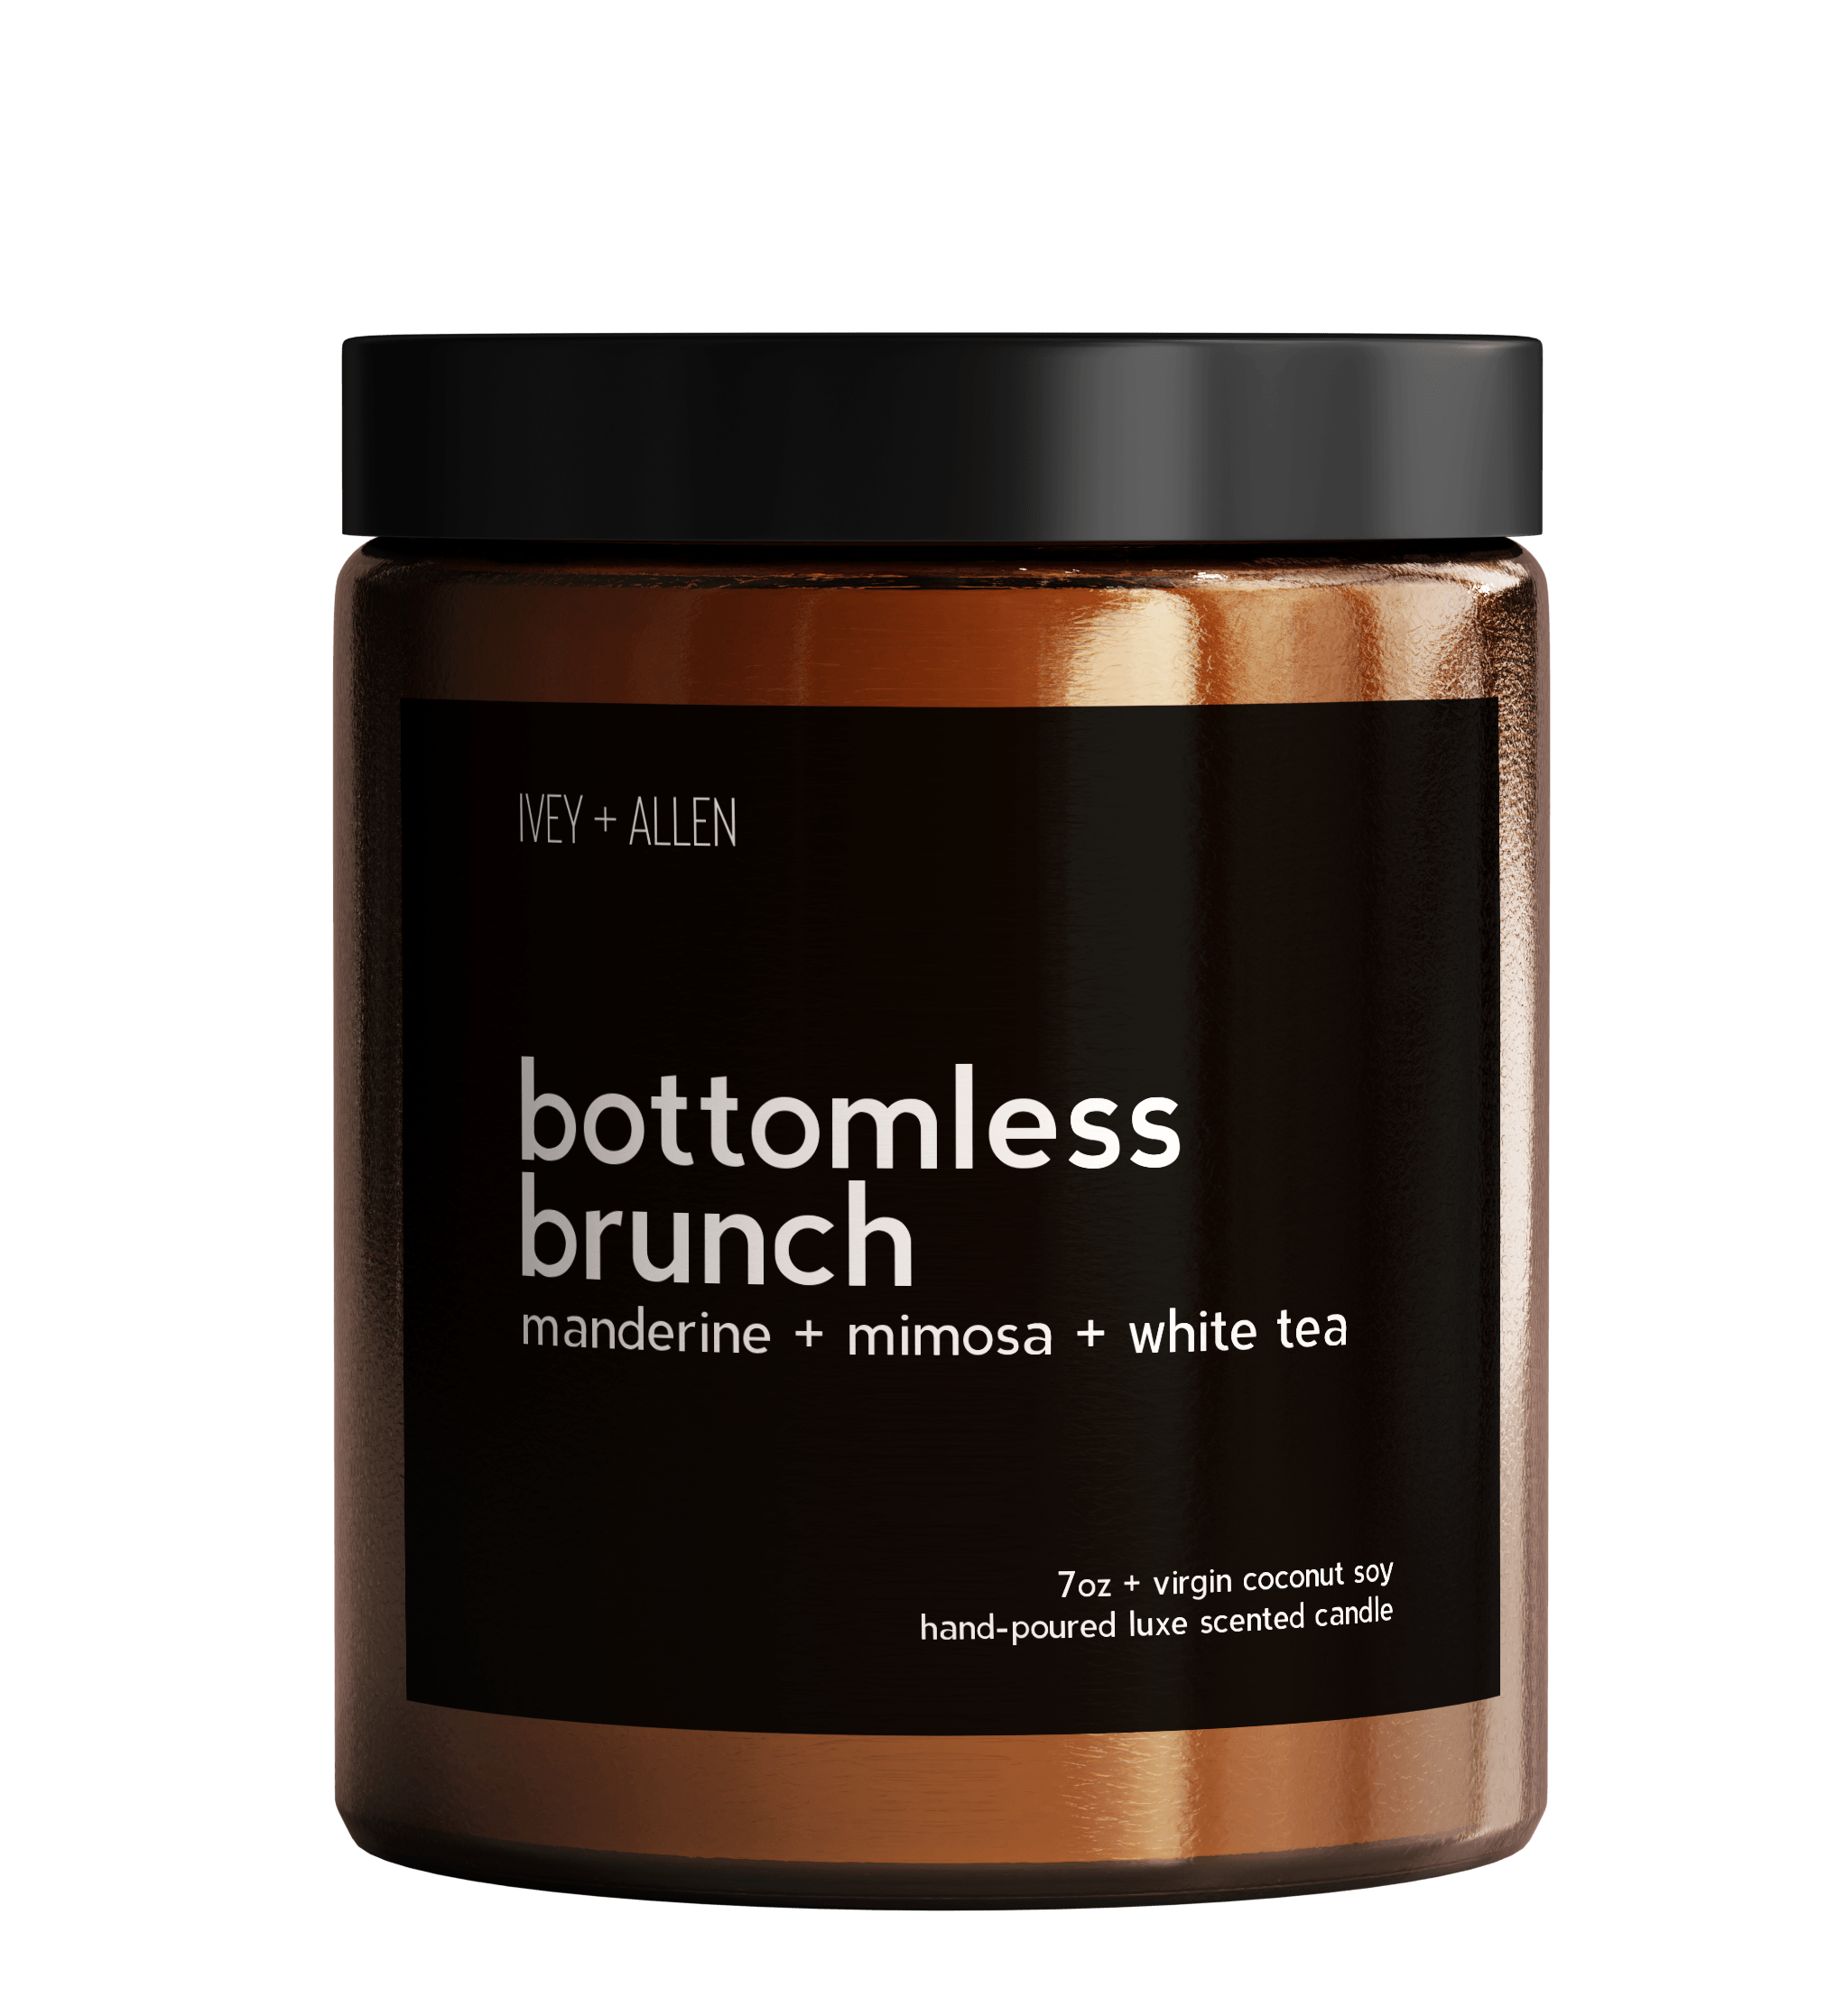 bottomless brunch - IVEY + ALLEN